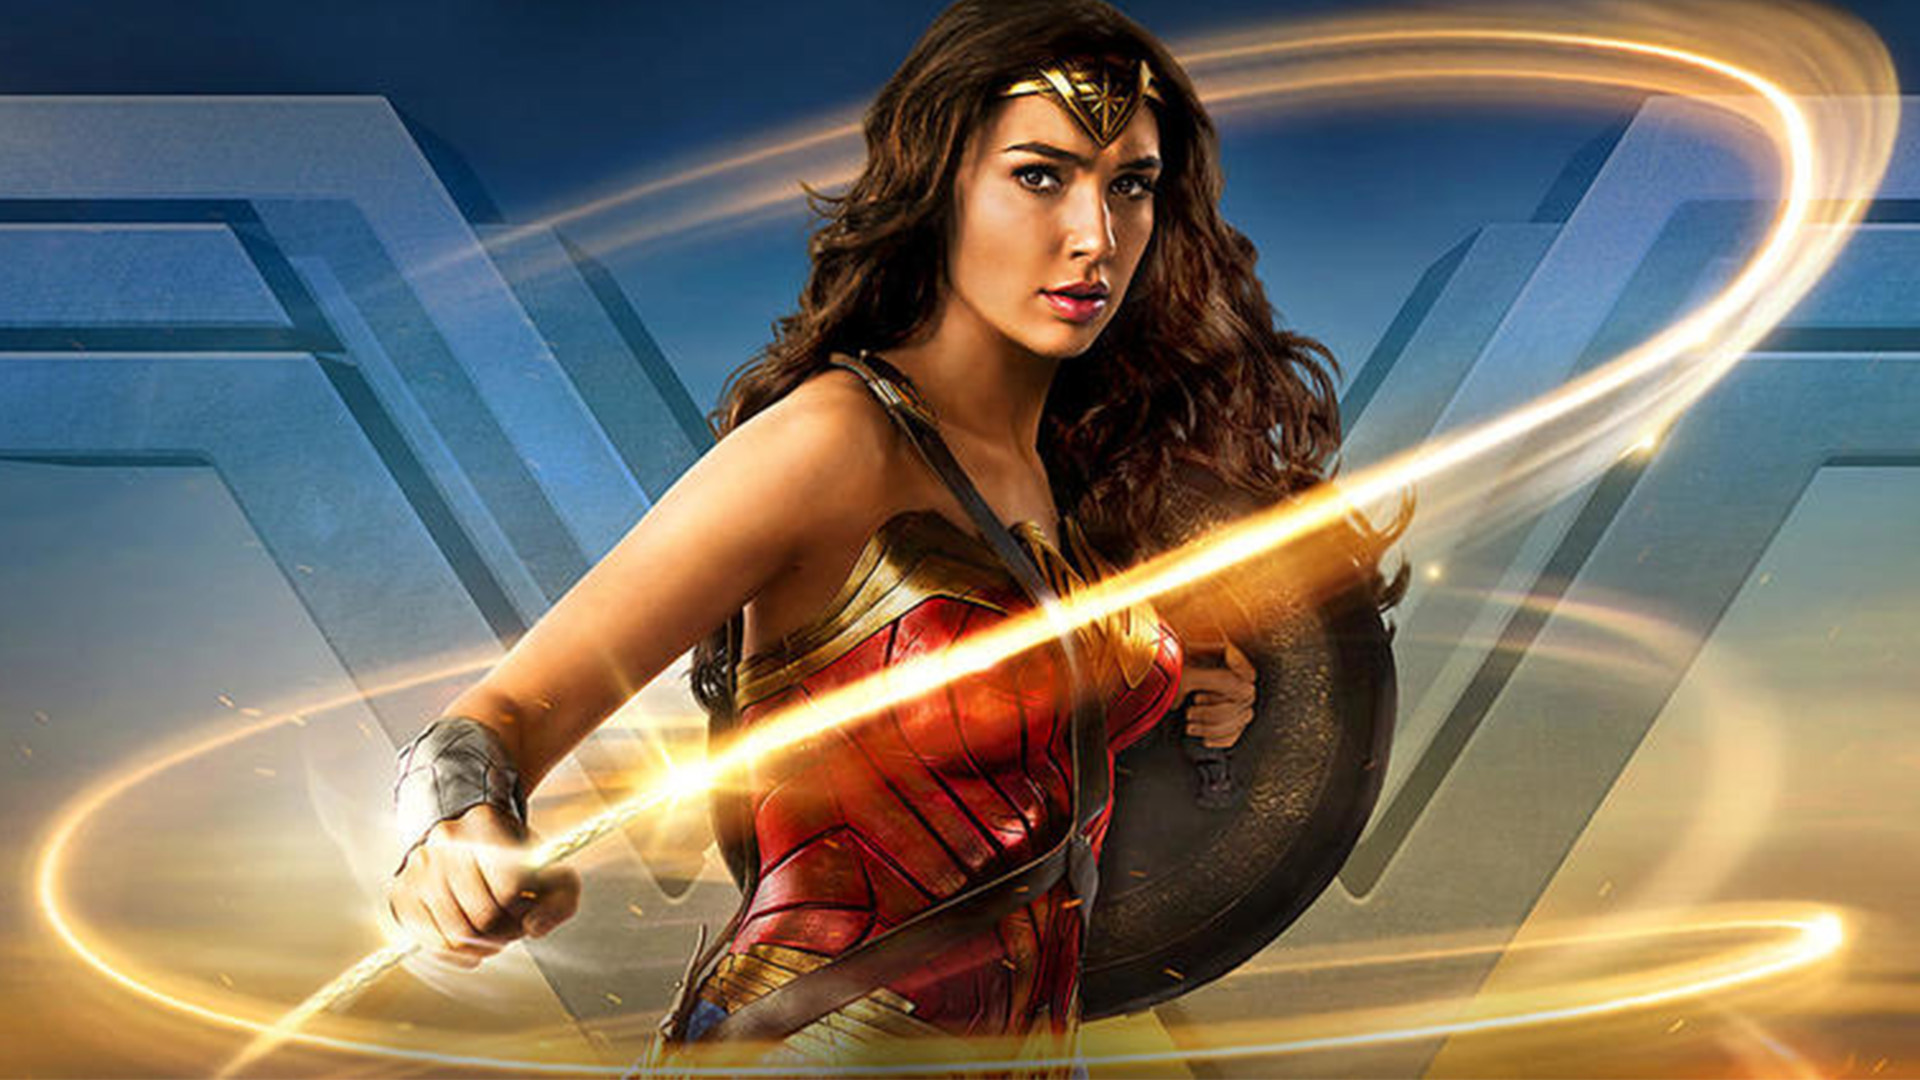 Wonder Woman poster cropped